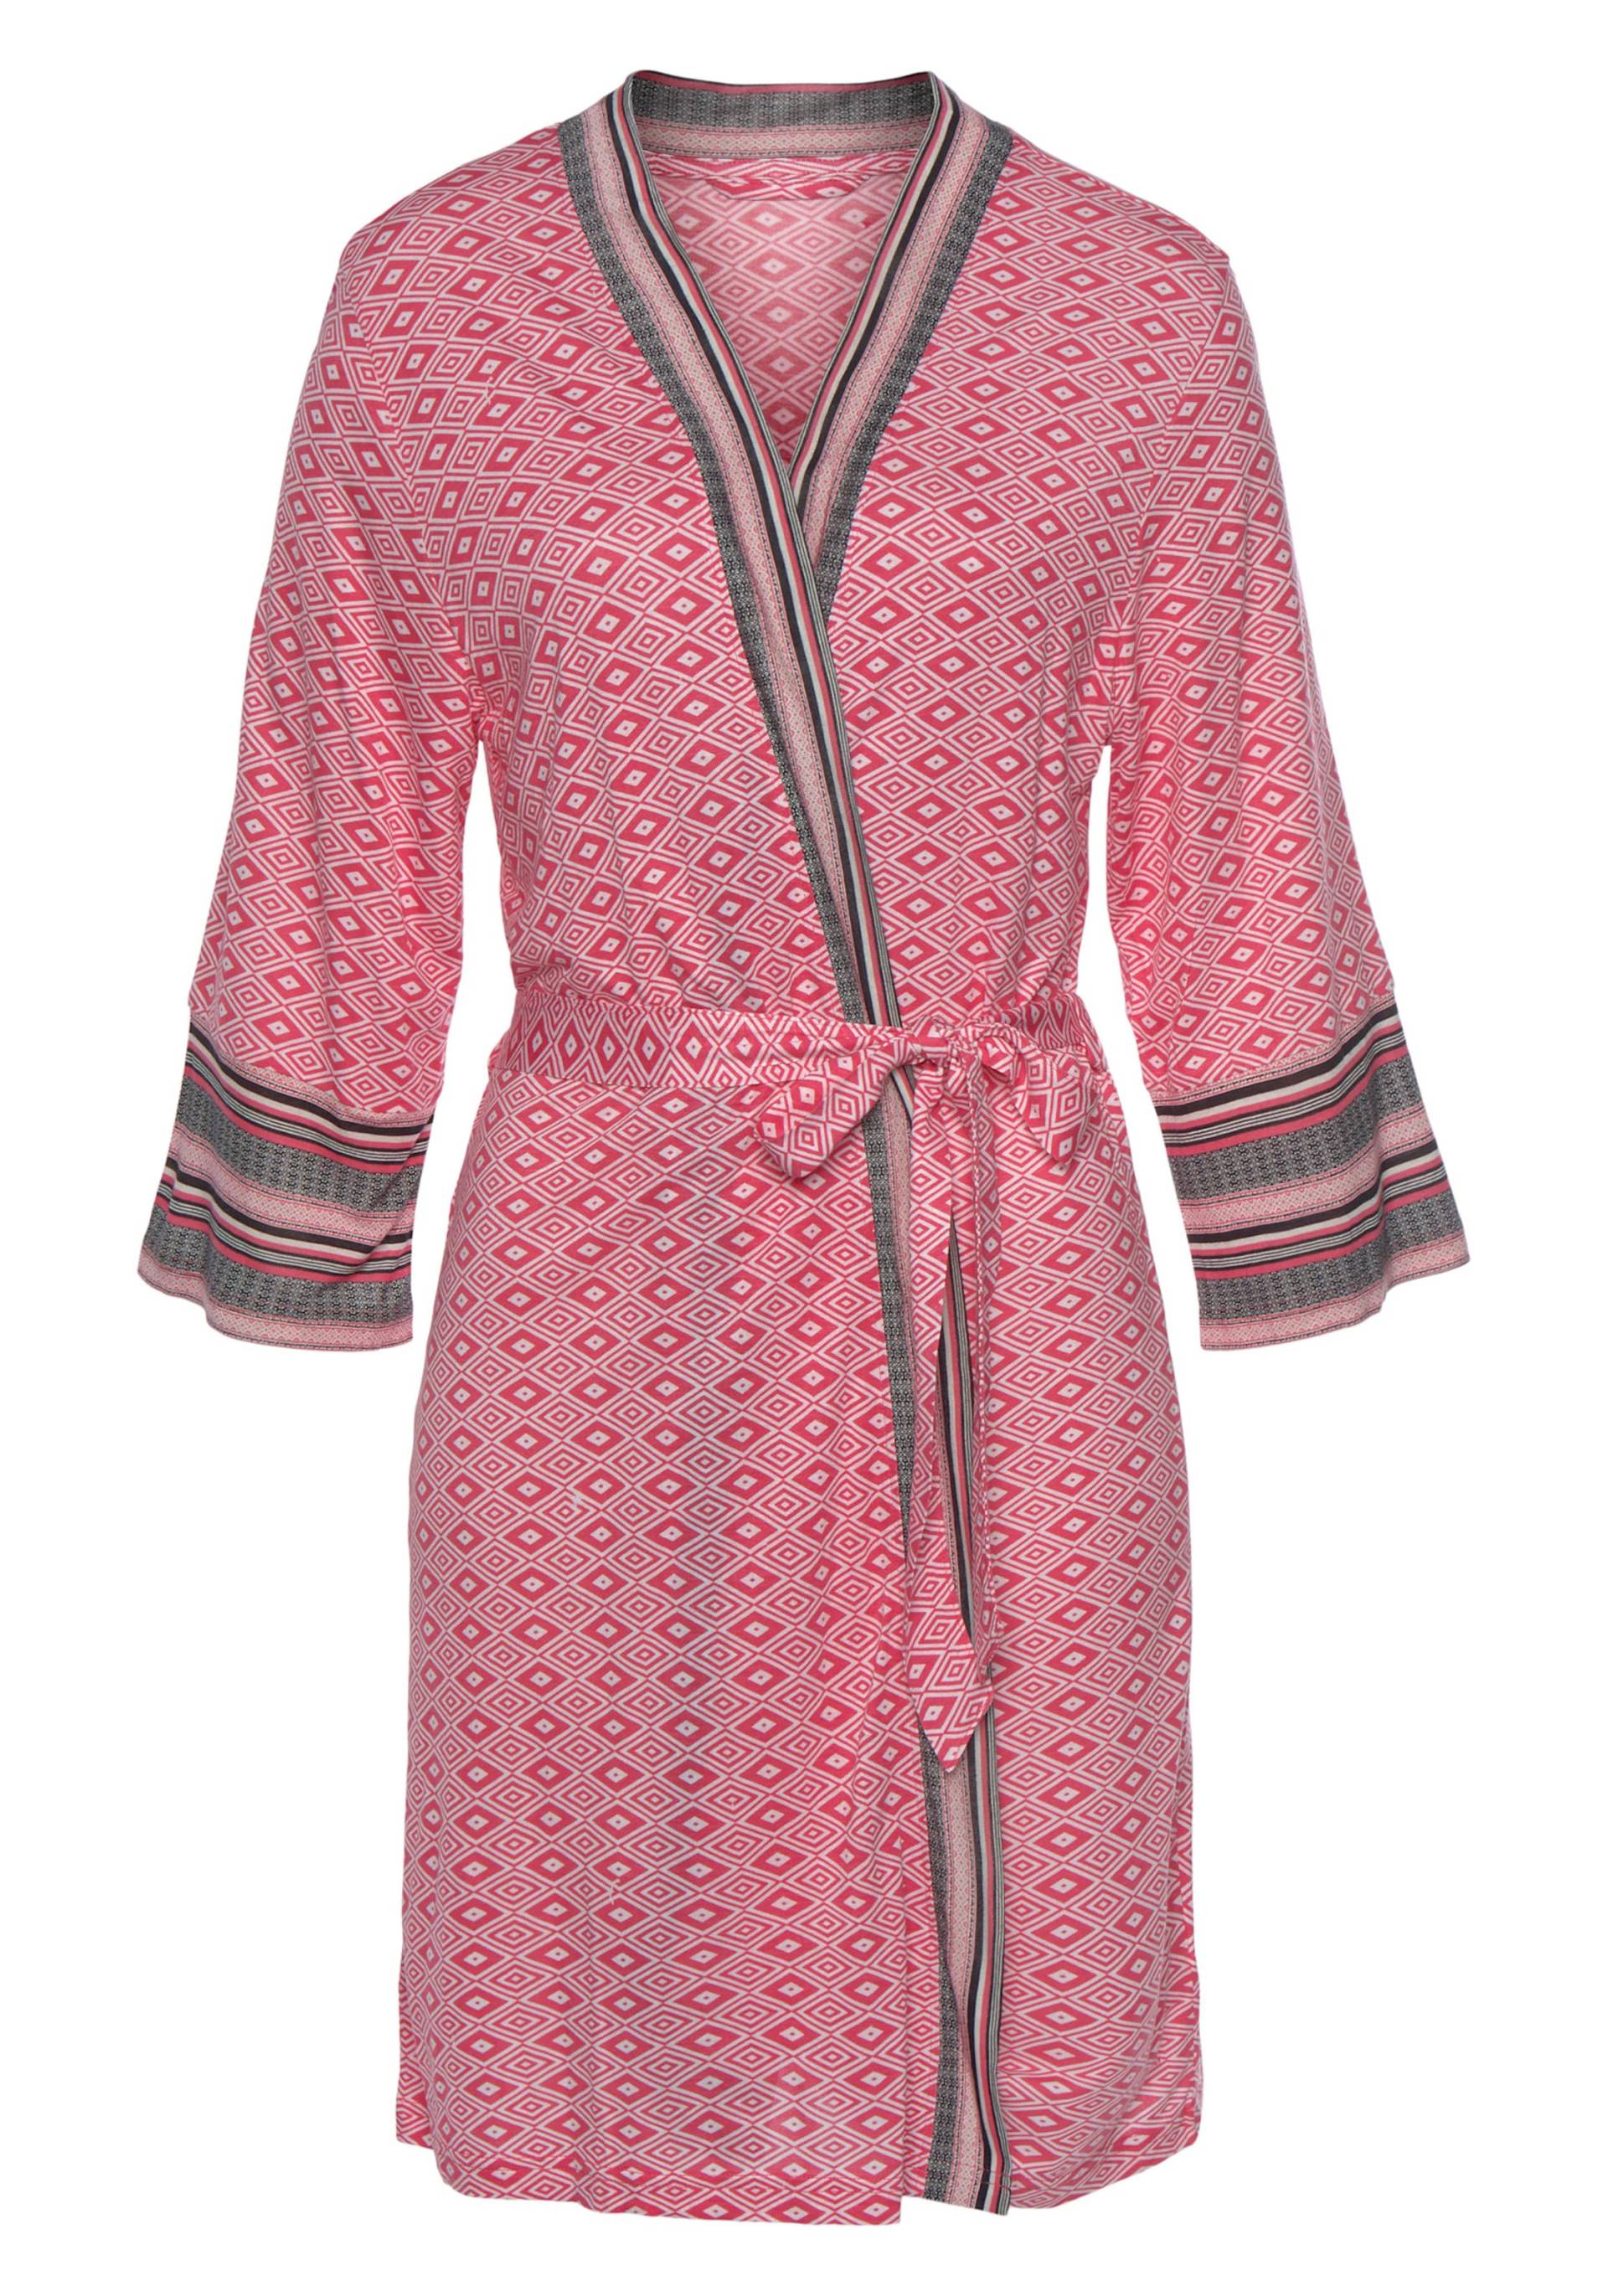 Kimono in pink gemustert von Vivance Dreams